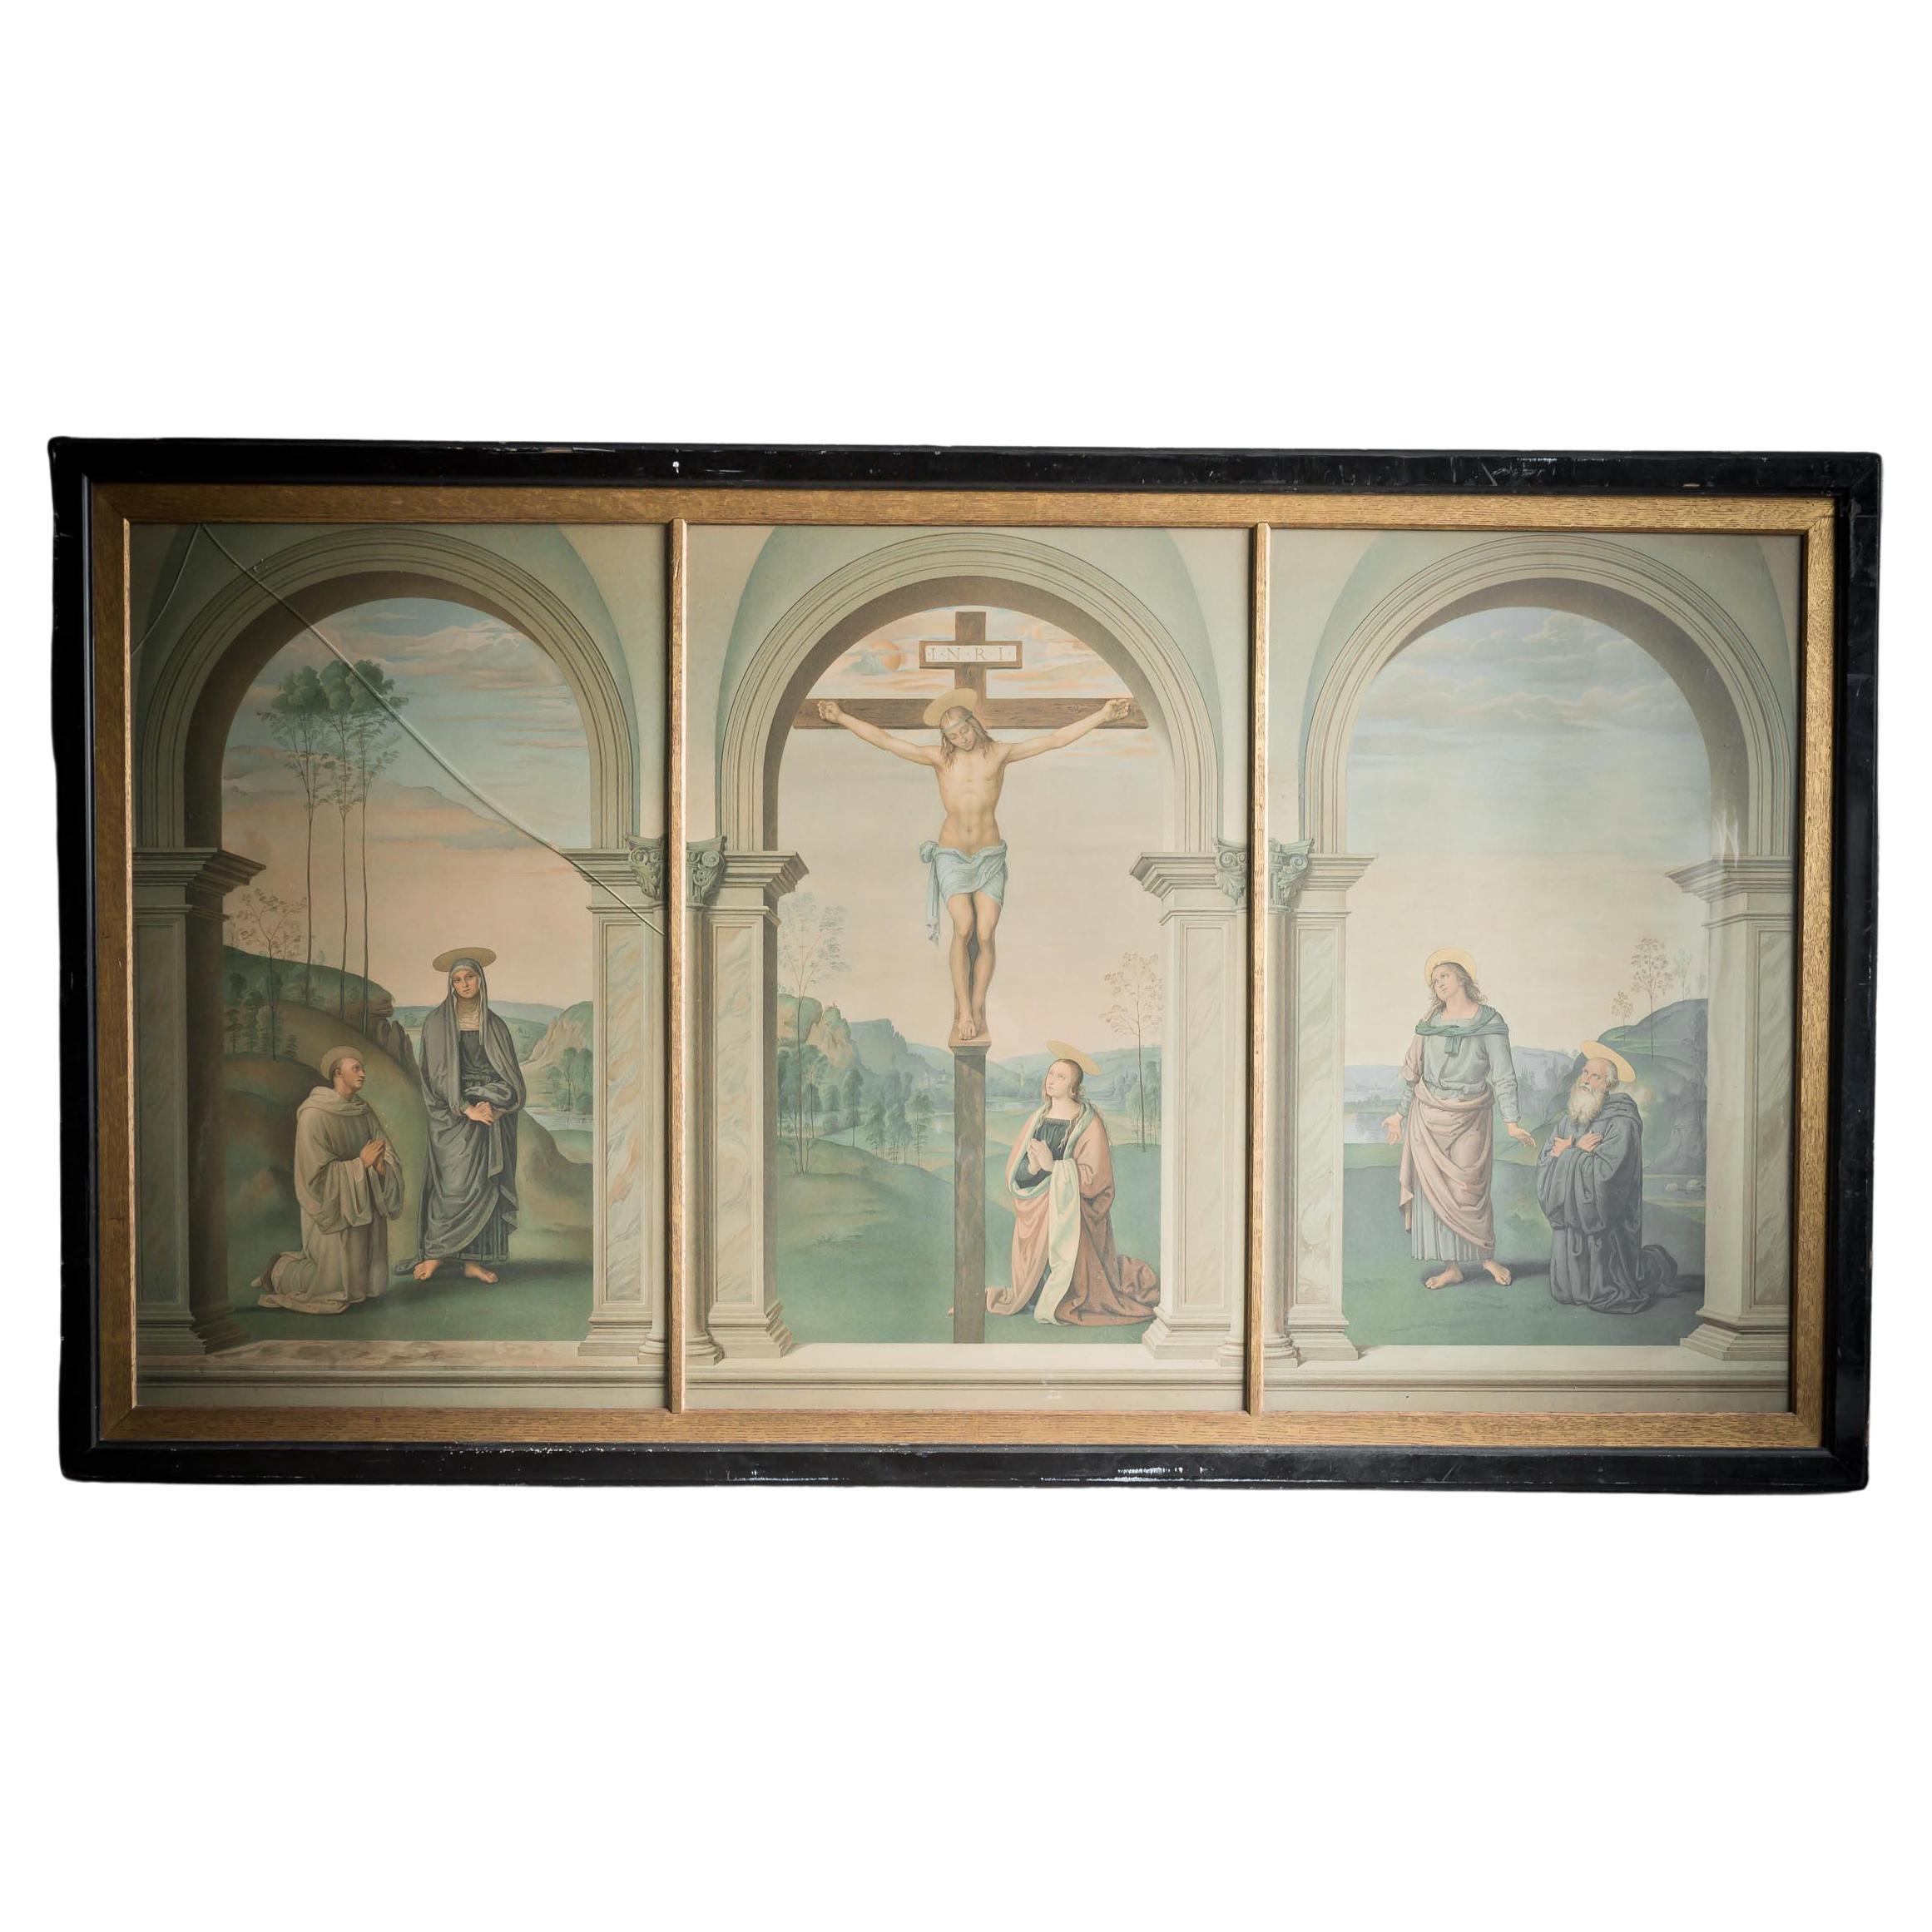 Religious Crucifixion Triptych